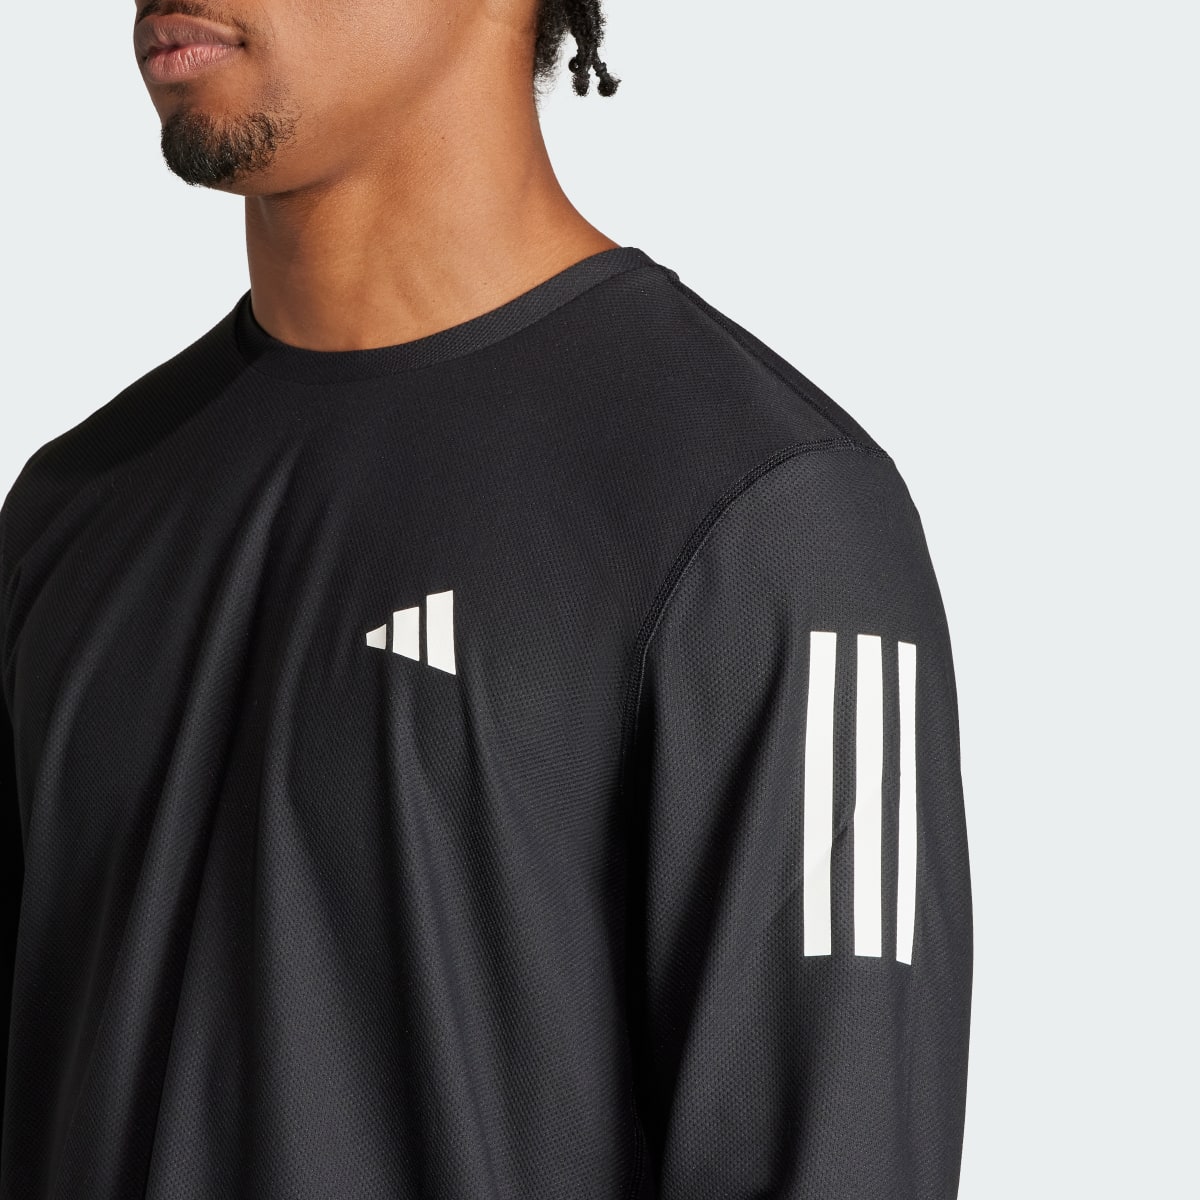 Adidas Own The Run Long-Sleeve Top. 6